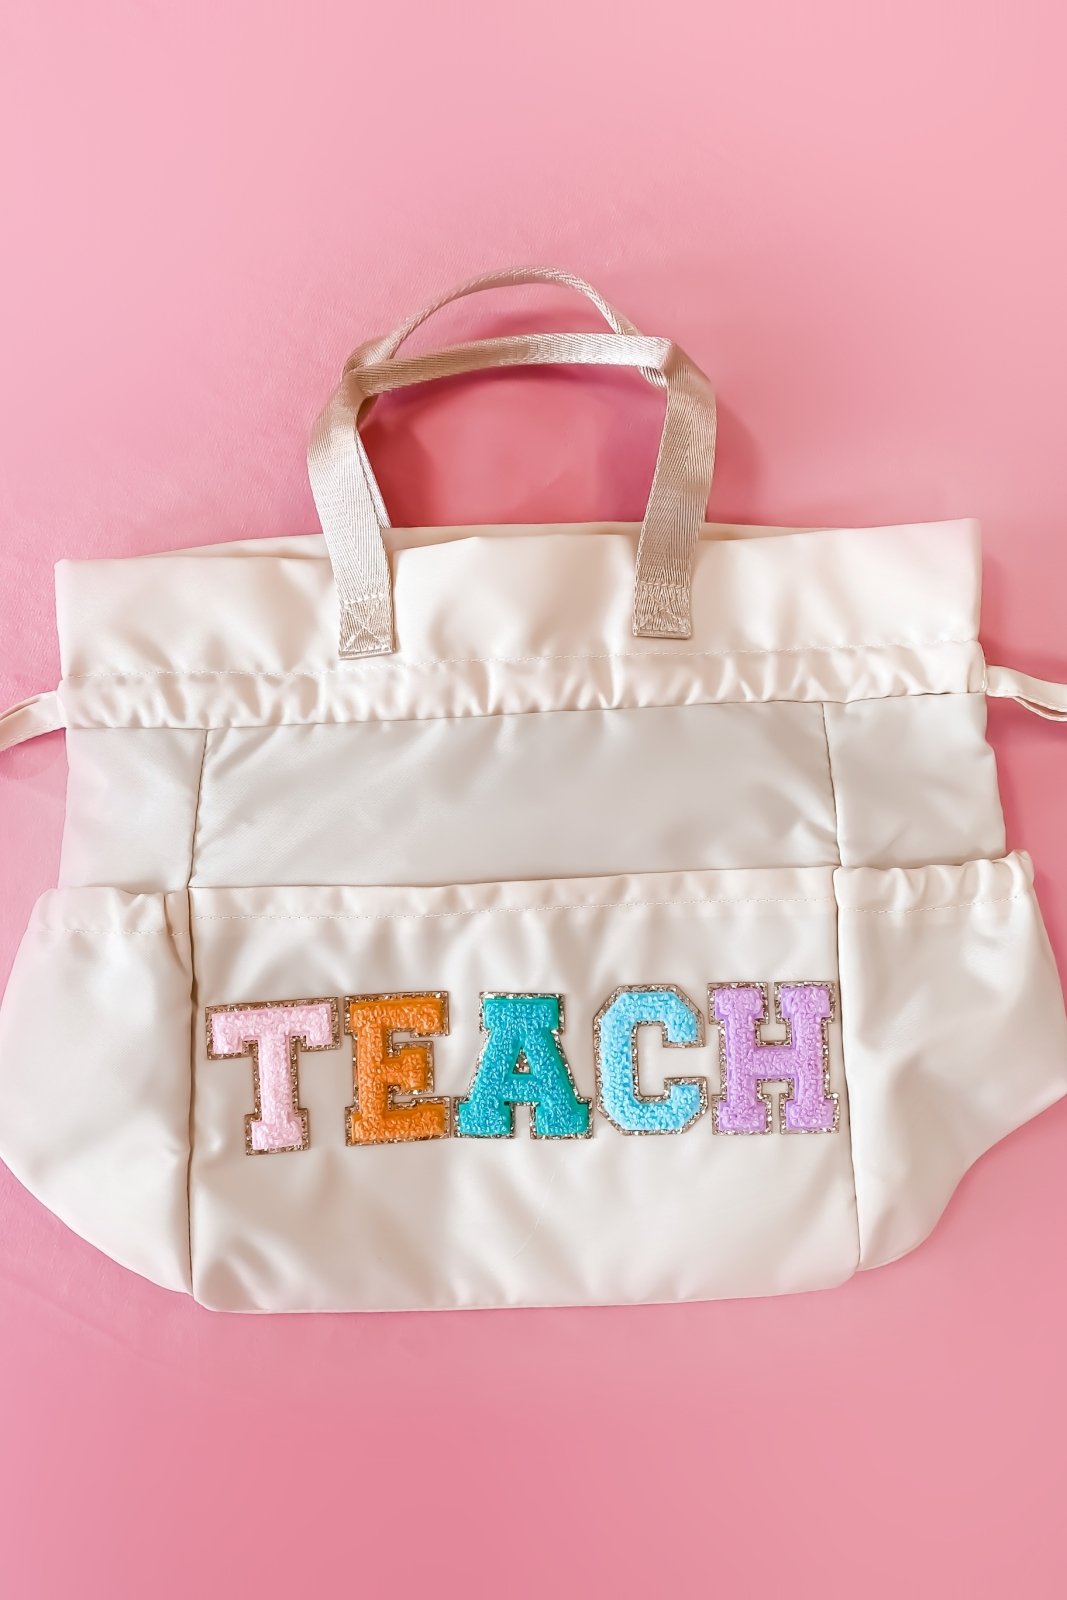 Cream TEACH Patch Lunch Bag